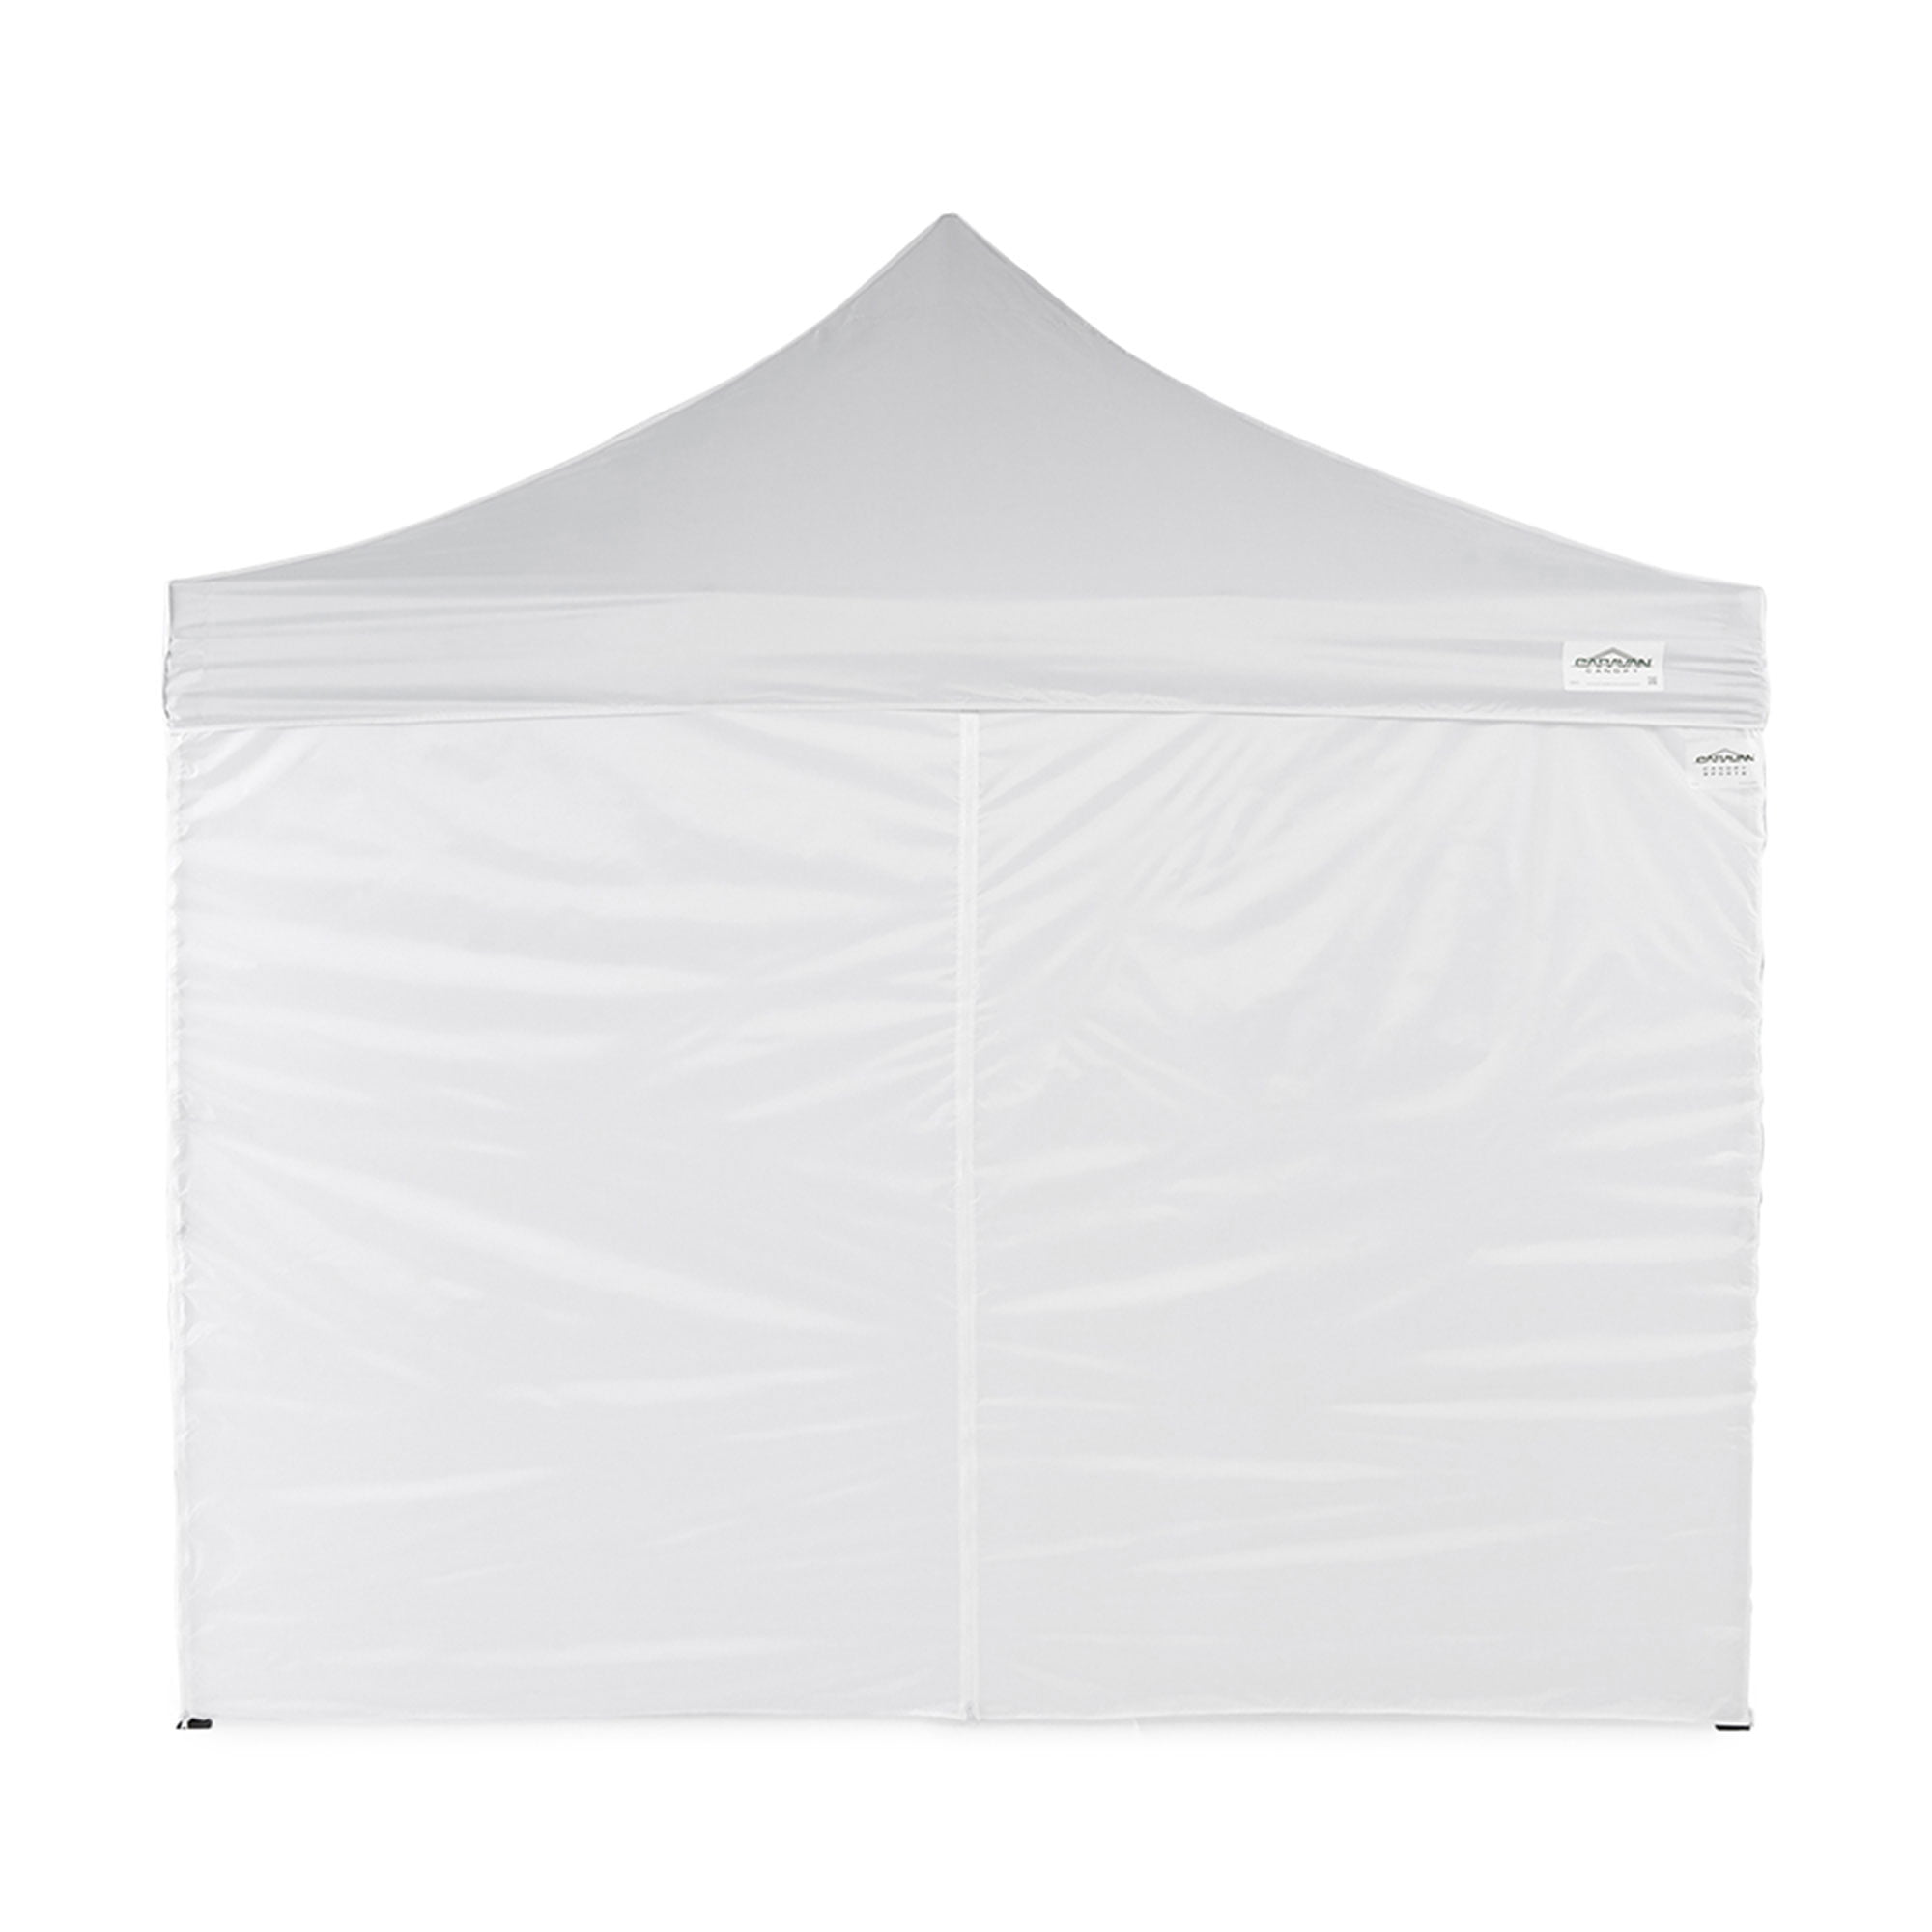 Caravan Canopy Sports Poly taf Sidewalls  10’ X 10’ White-set Of 4 